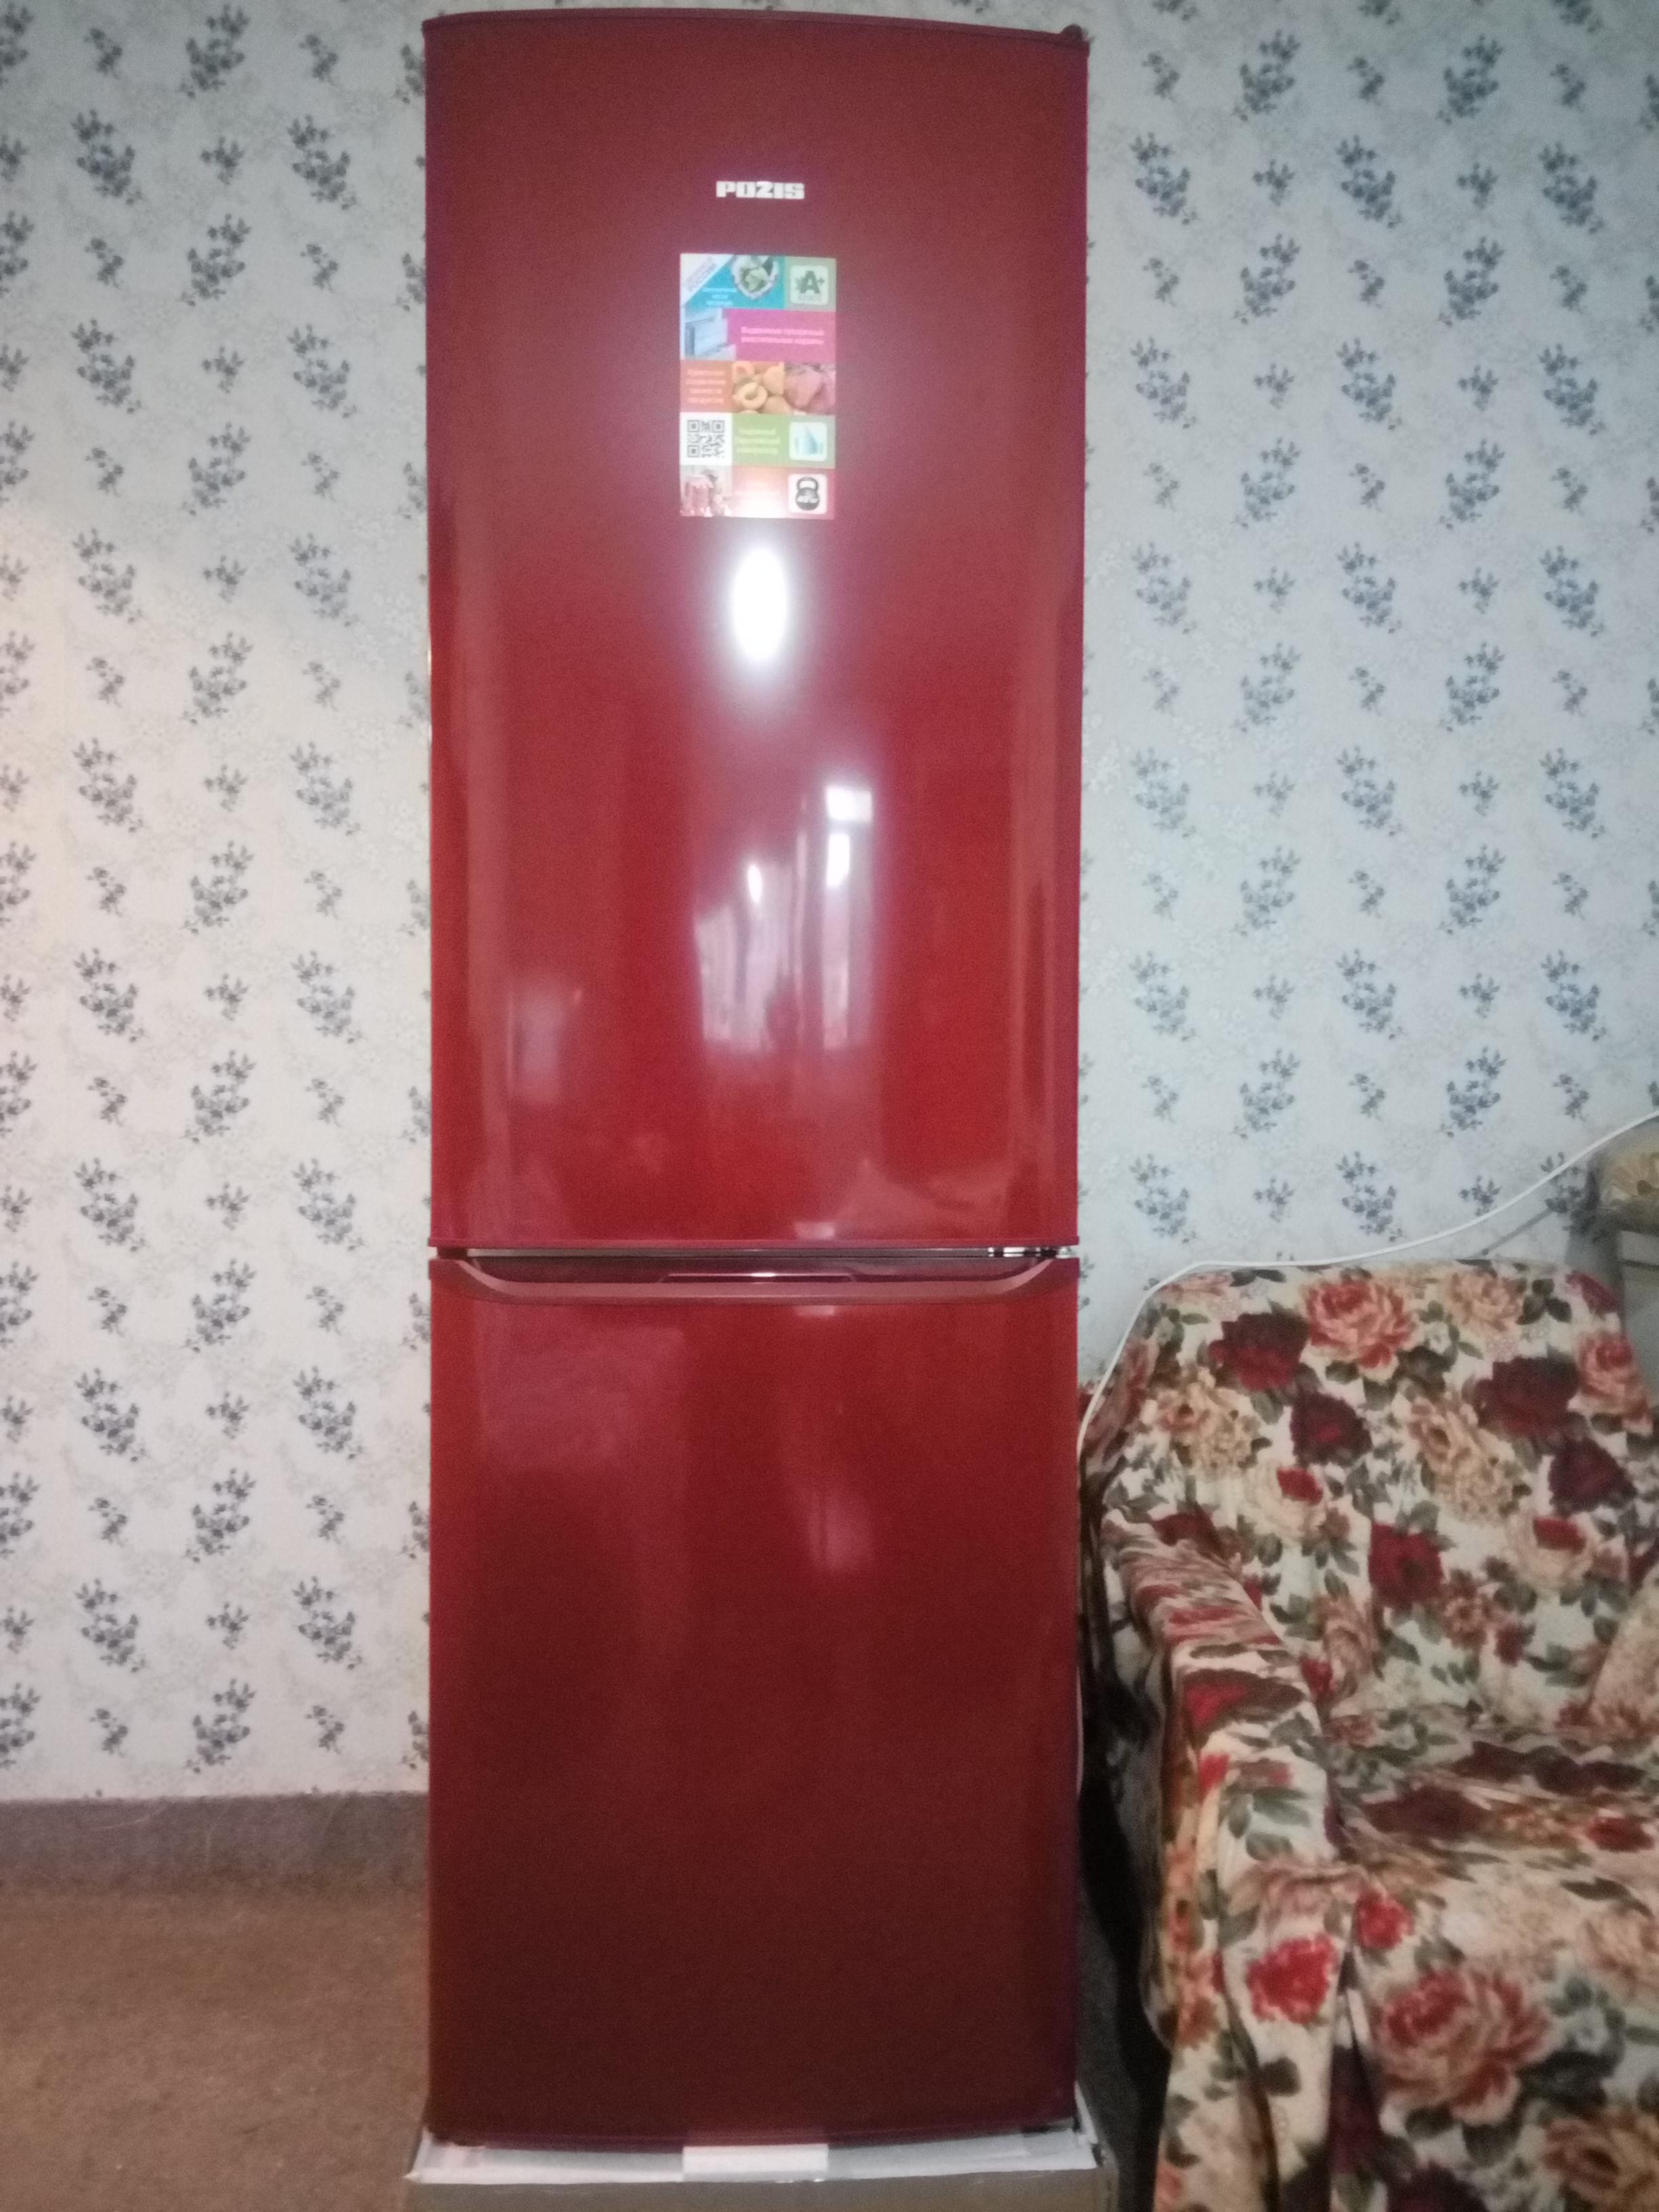 Rk fnf 170. Холодильник Pozis RK-149 Рубин. Холодильник Pozis RK-149 А, рубиновый. Холодильник Pozis RK-139 Рубин. Холодильник Pozis RK-149 красный.